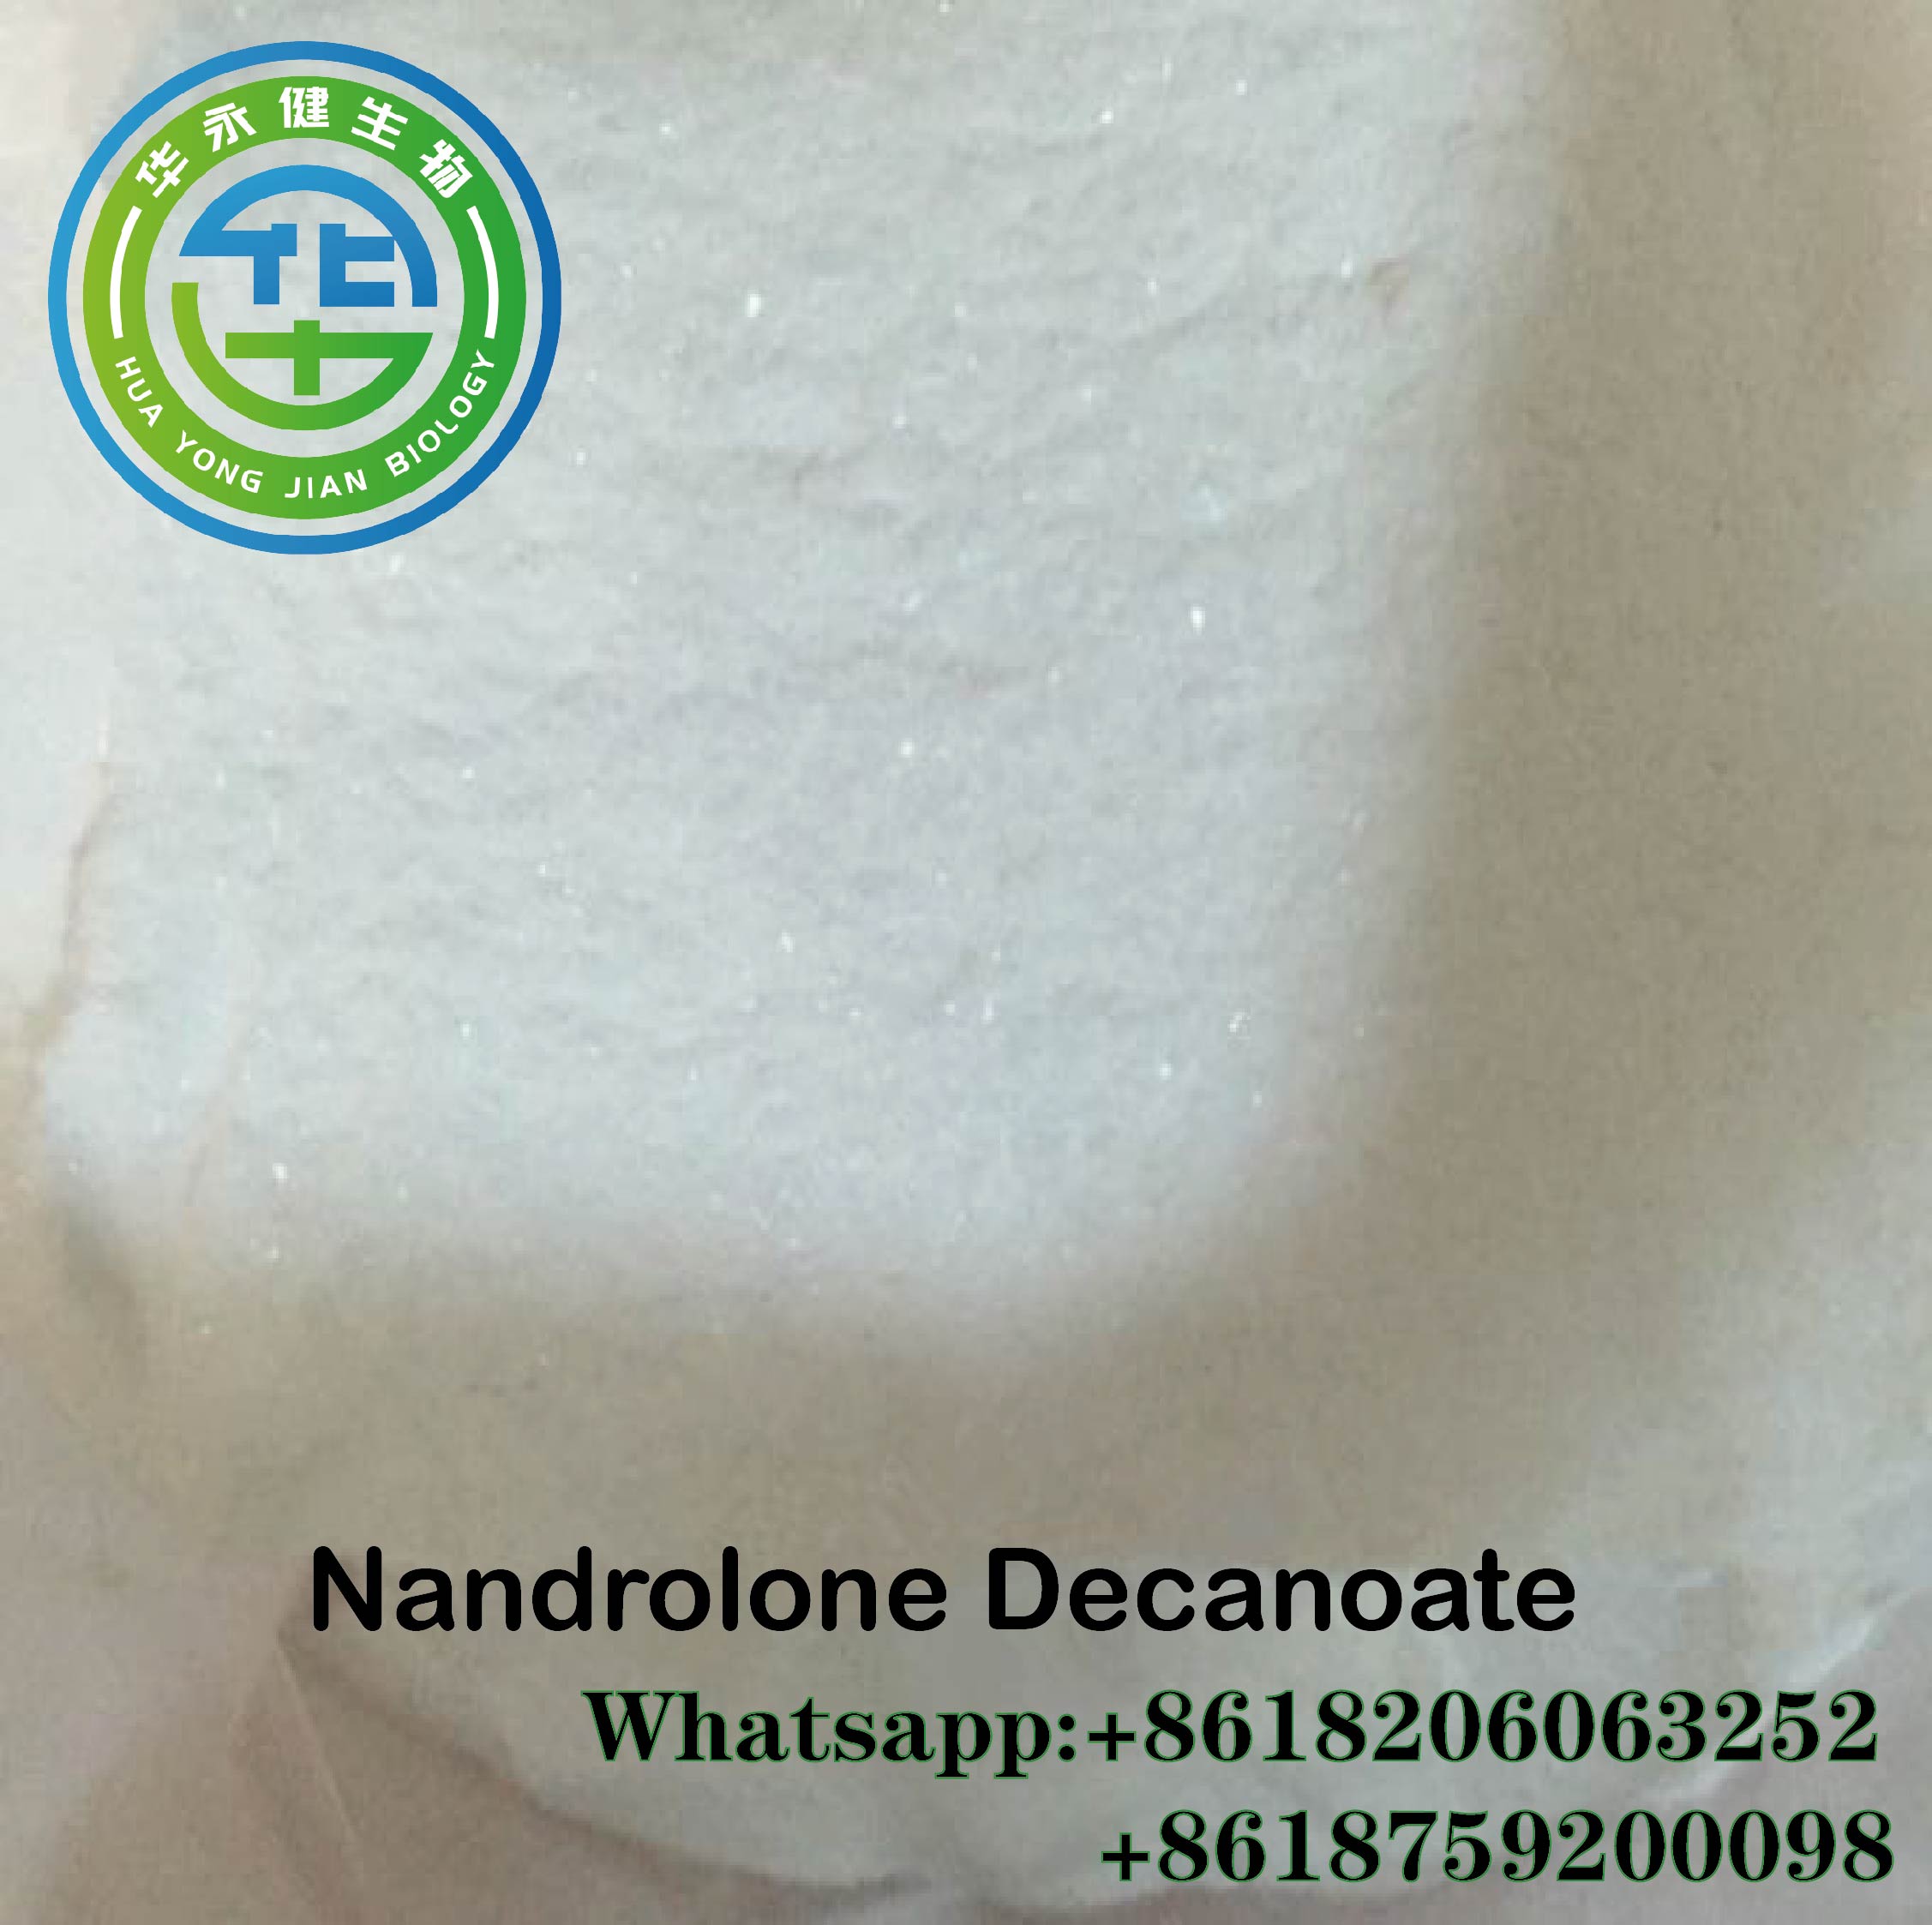 Deca Durabolin steraduft líkamsbyggingaruppbót Nandrolone Decanoate CAS 360-70-3 Valin mynd